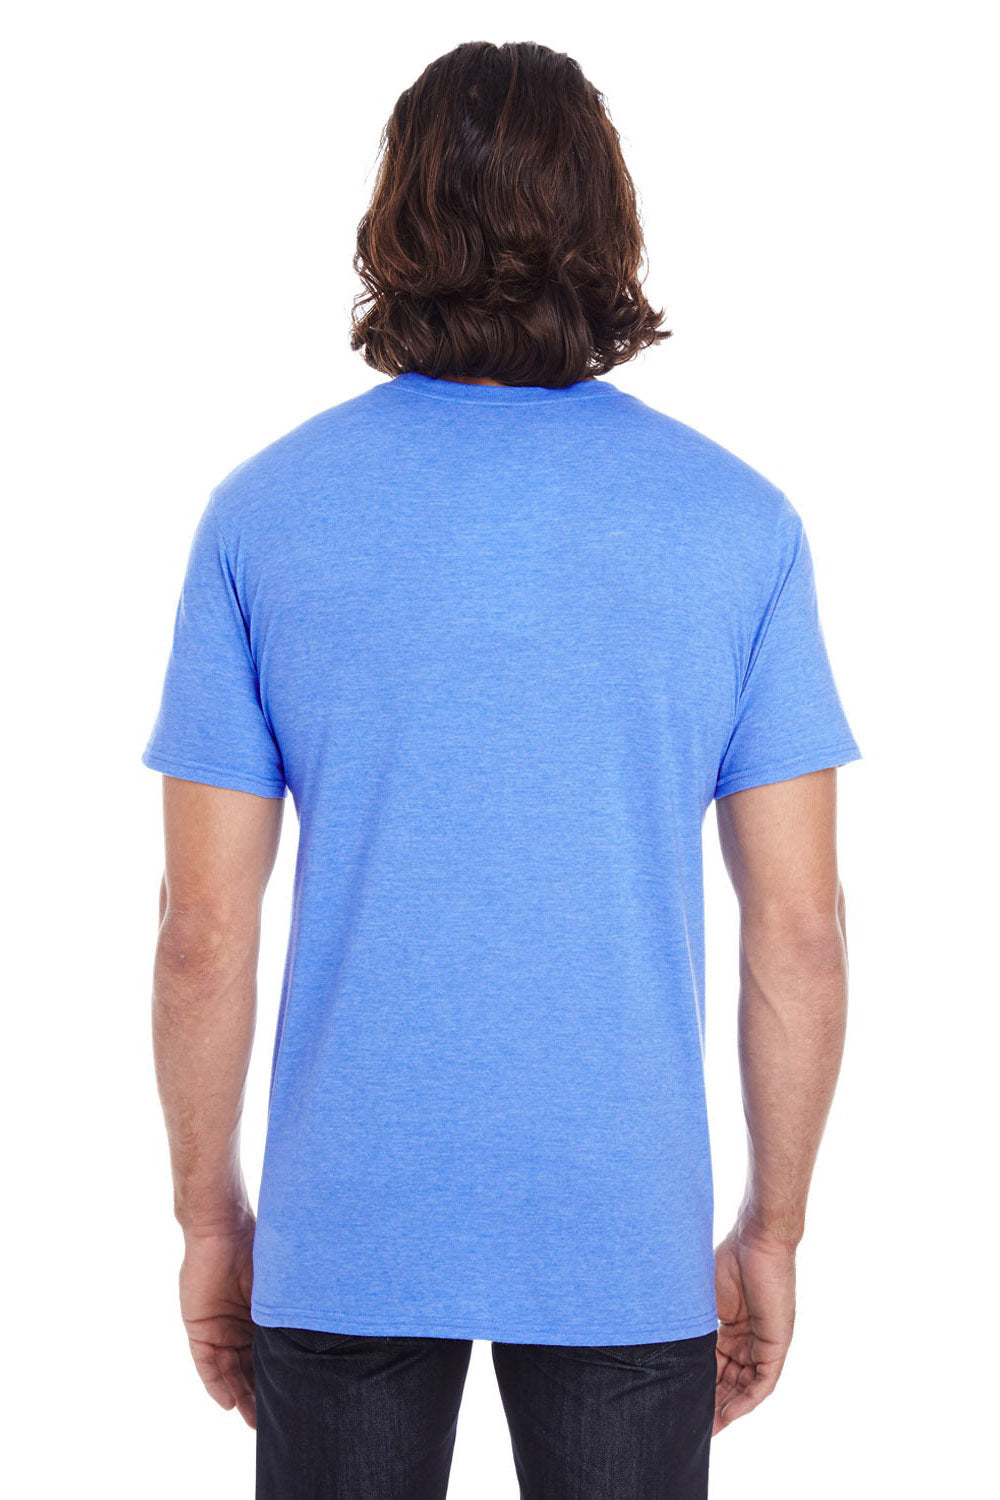 Anvil 980 Mens Short Sleeve Crewneck T-Shirt Heather Royal Blue Back